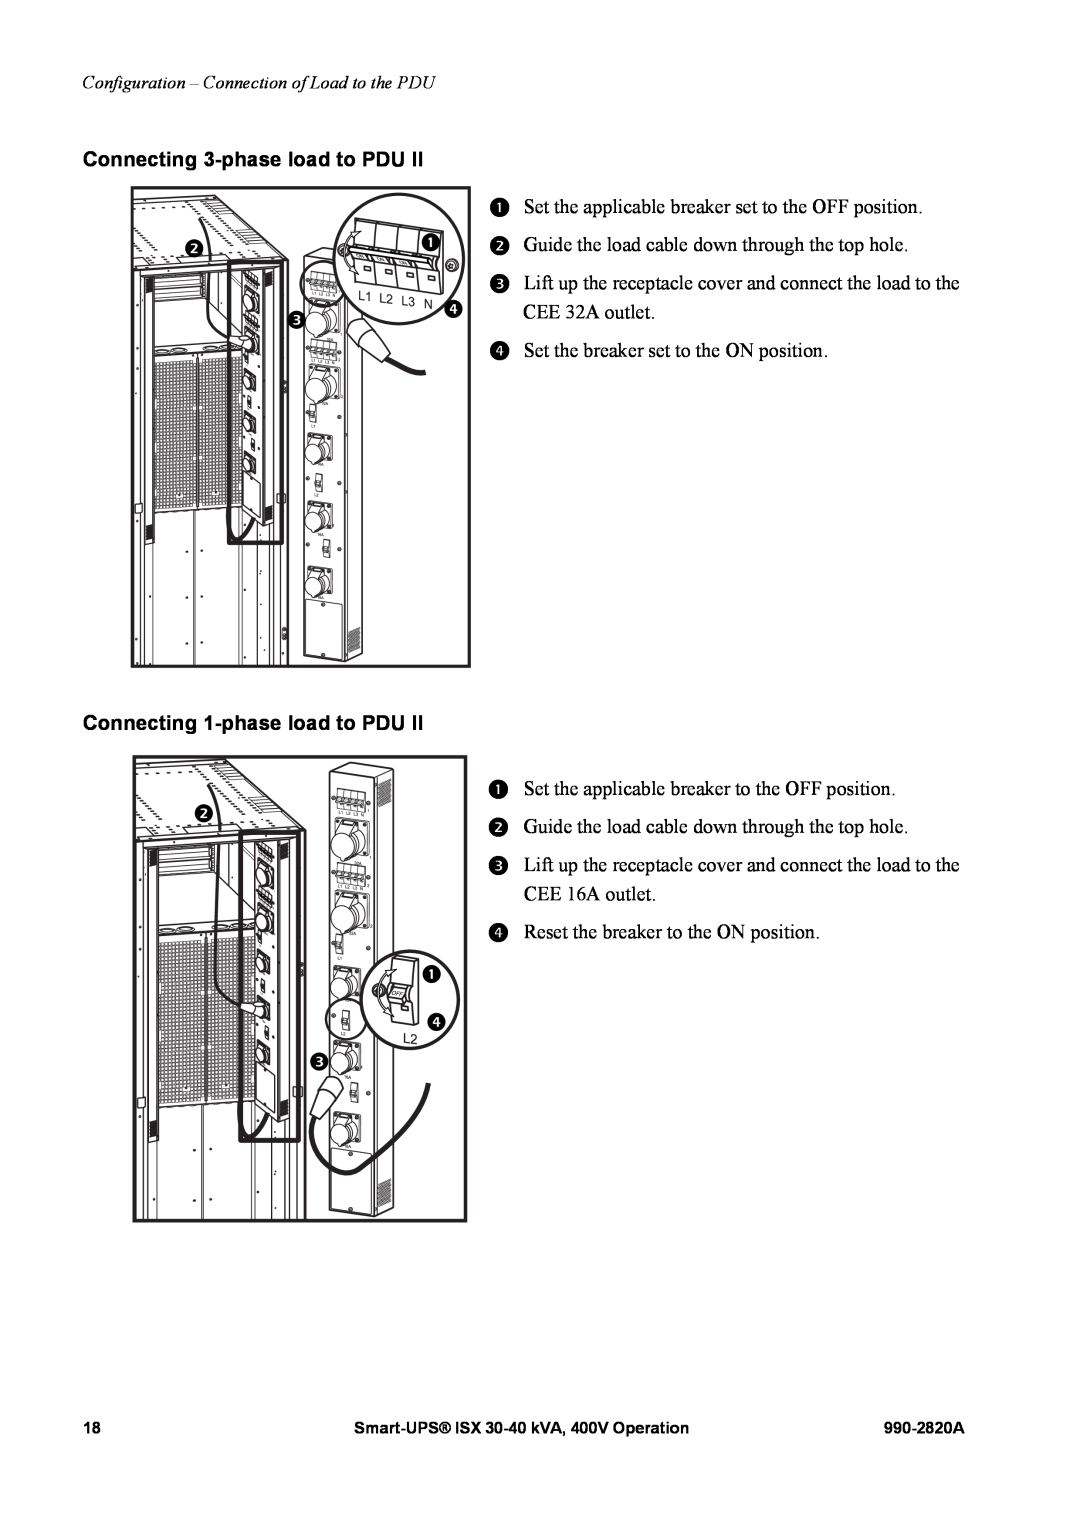 American Power Conversion VT ISX manual Connecting 3-phase load to PDU, Connecting 1-phase load to PDU 